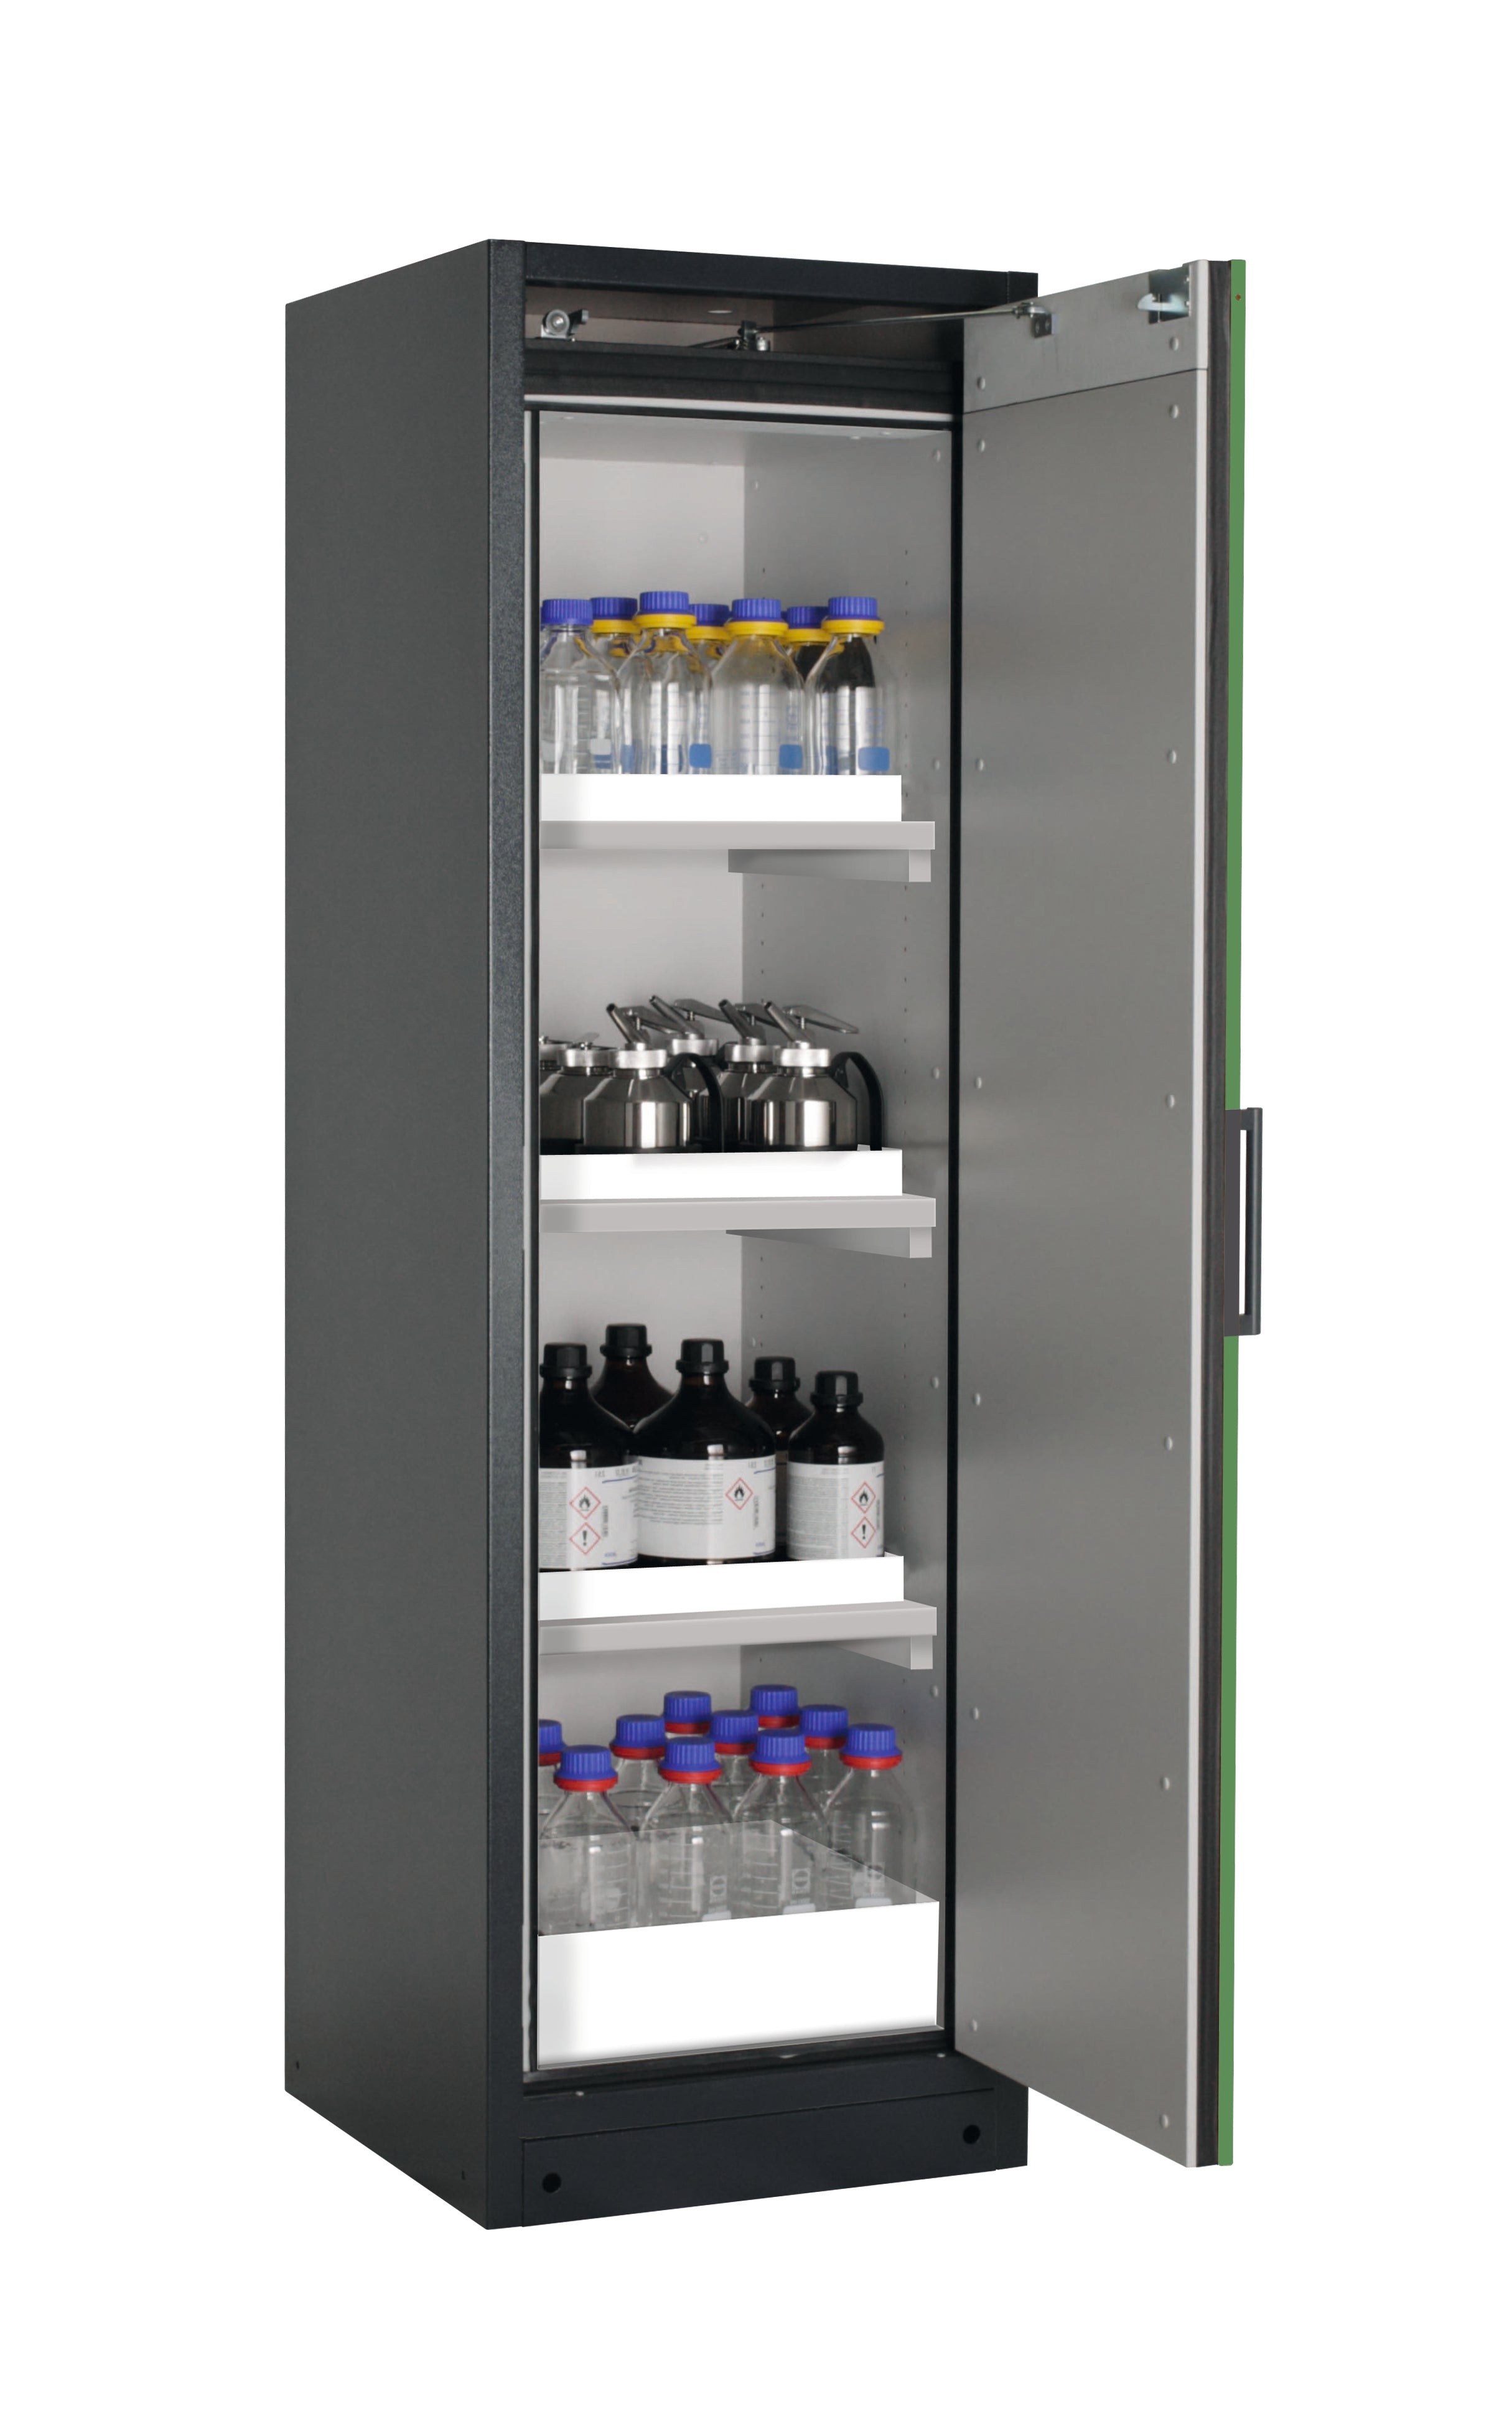 Type 90 safety storage cabinet Q-PEGASUS-90 model Q90.195.060.WDACR in reseda green RAL 6011 with 3x tray shelf (standard) (polypropylene),